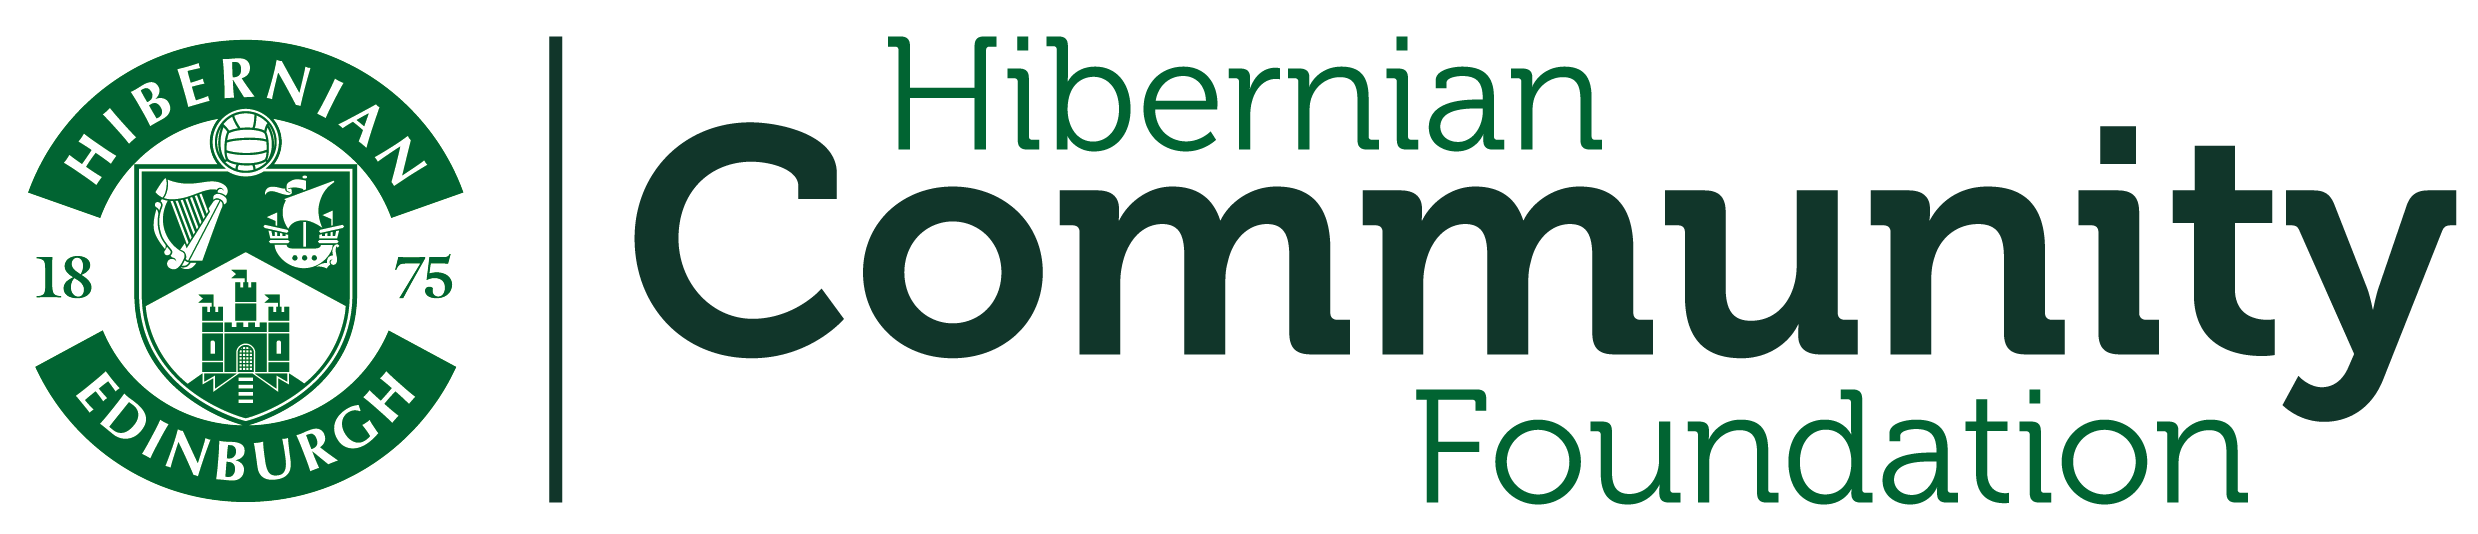 logo for Hibernian Community Foundation Limited